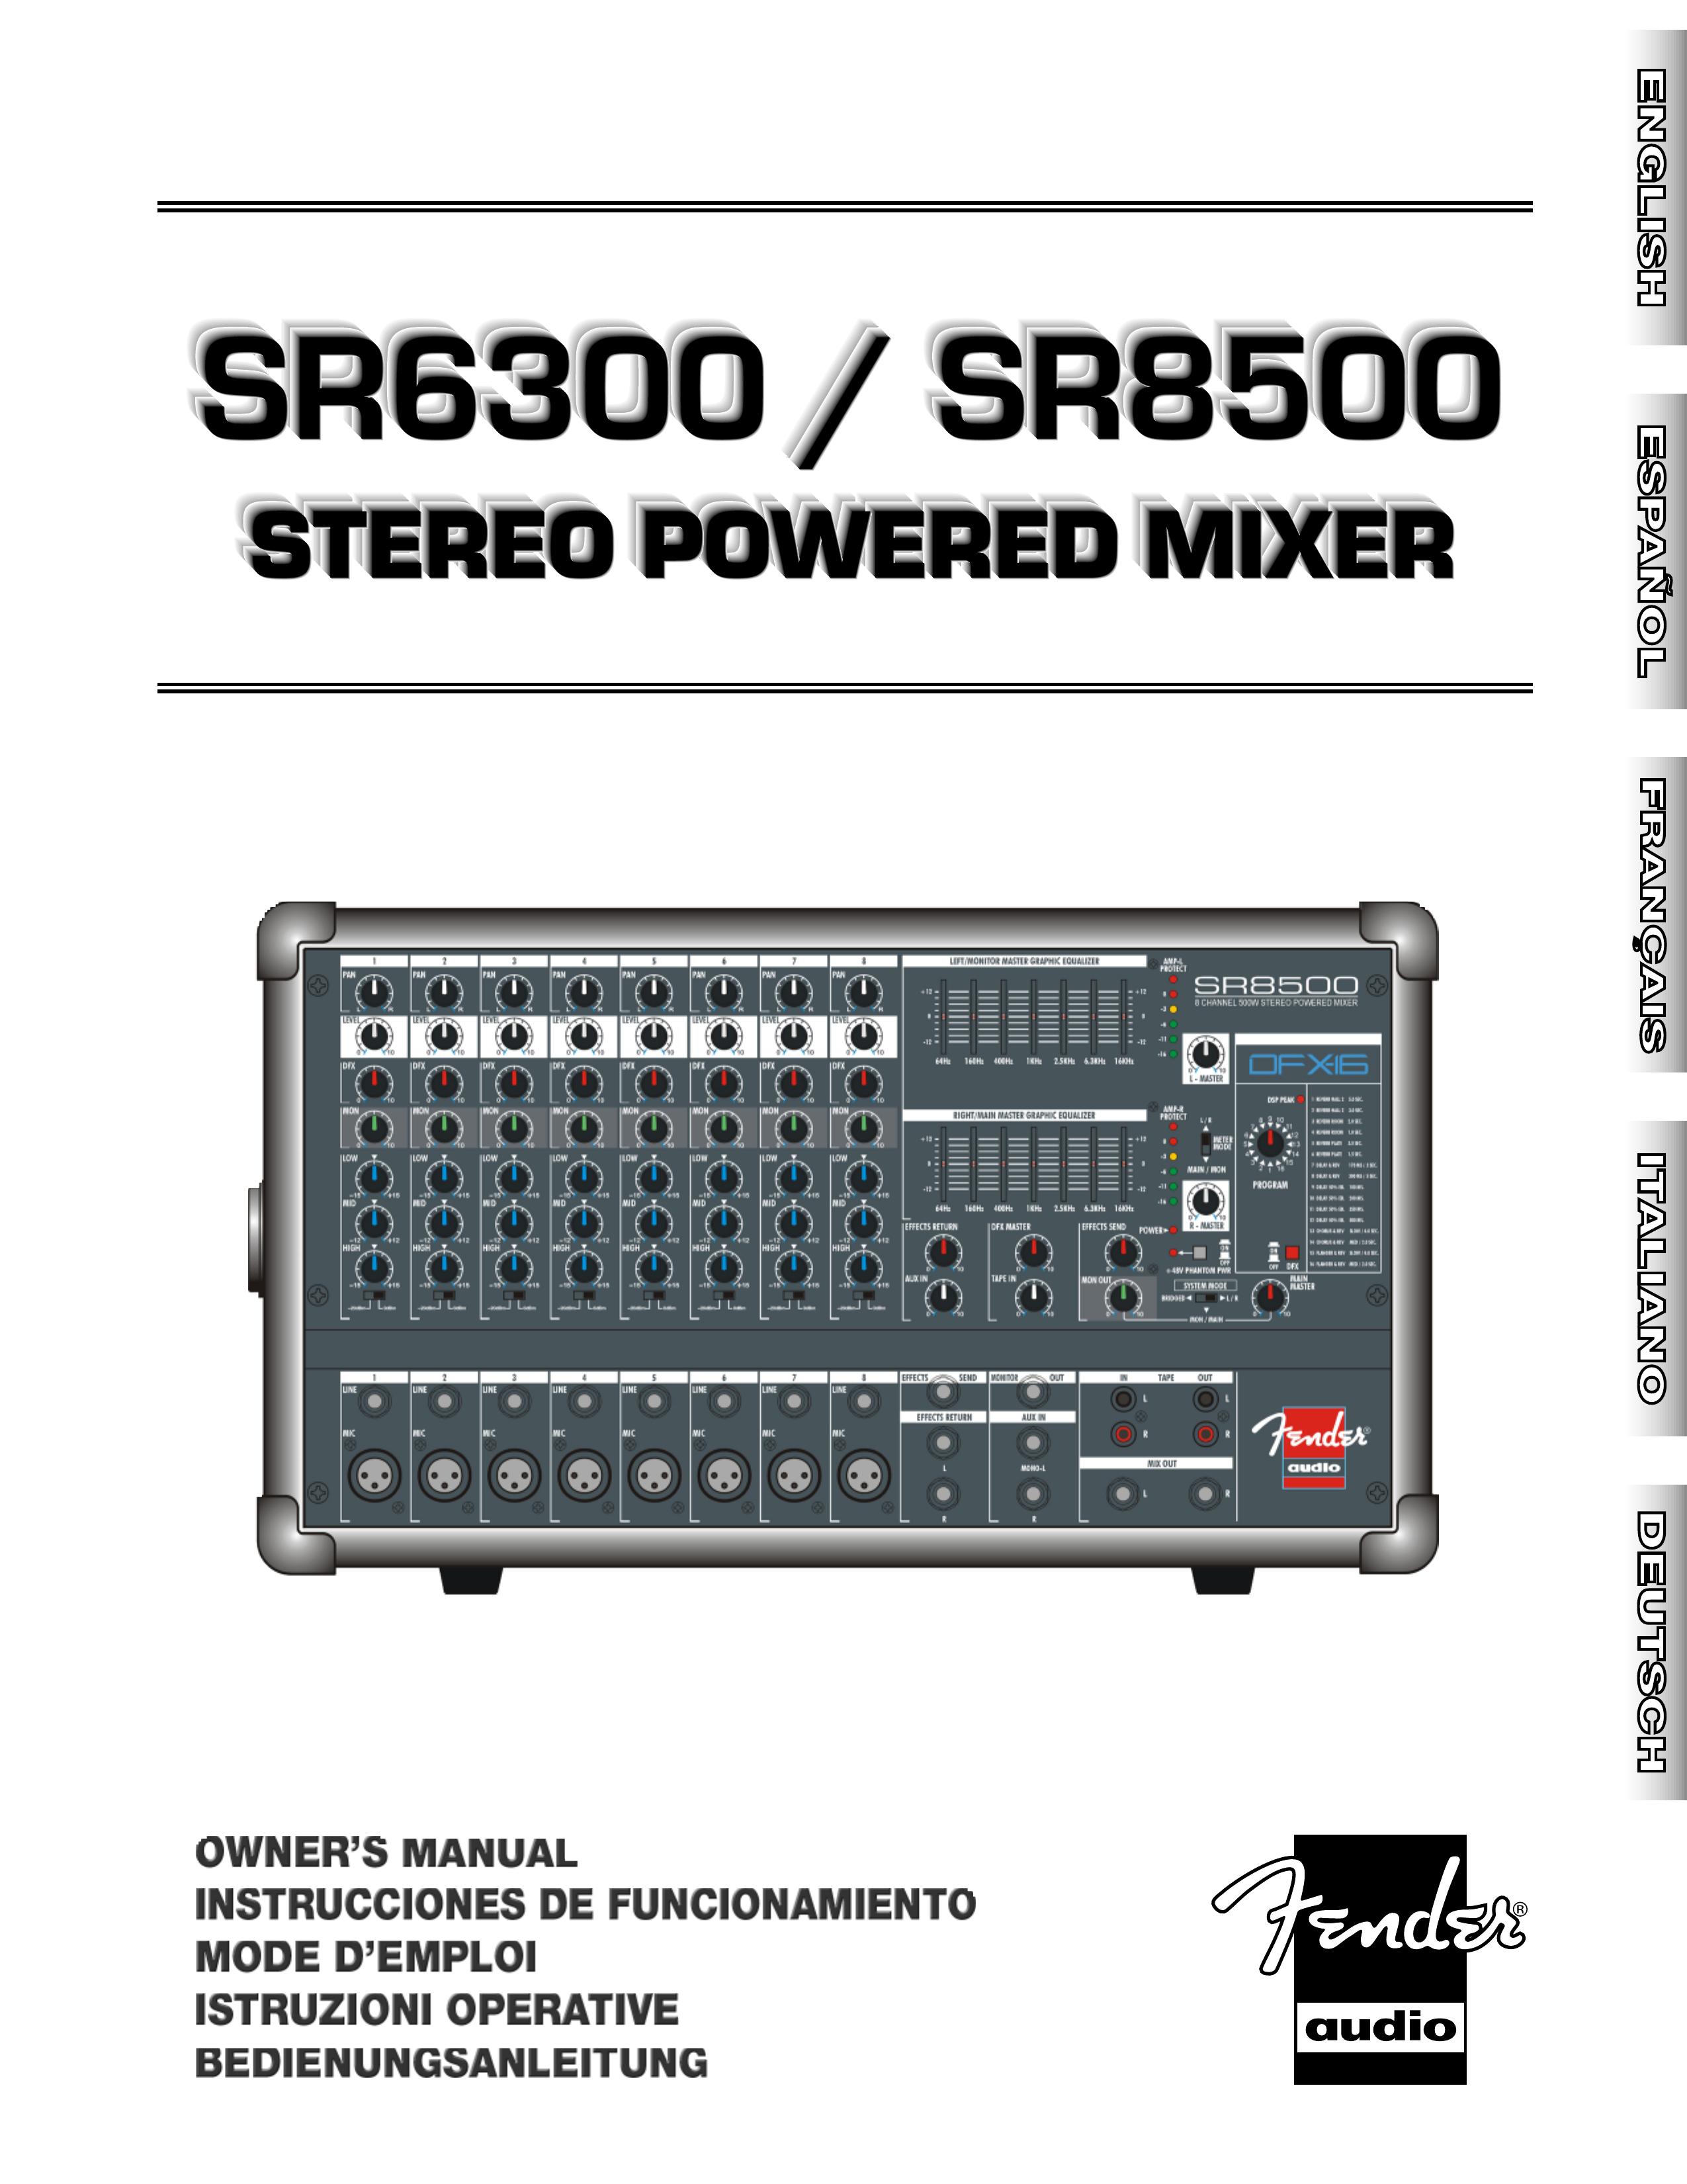 Fender SR6300 Music Mixer User Manual